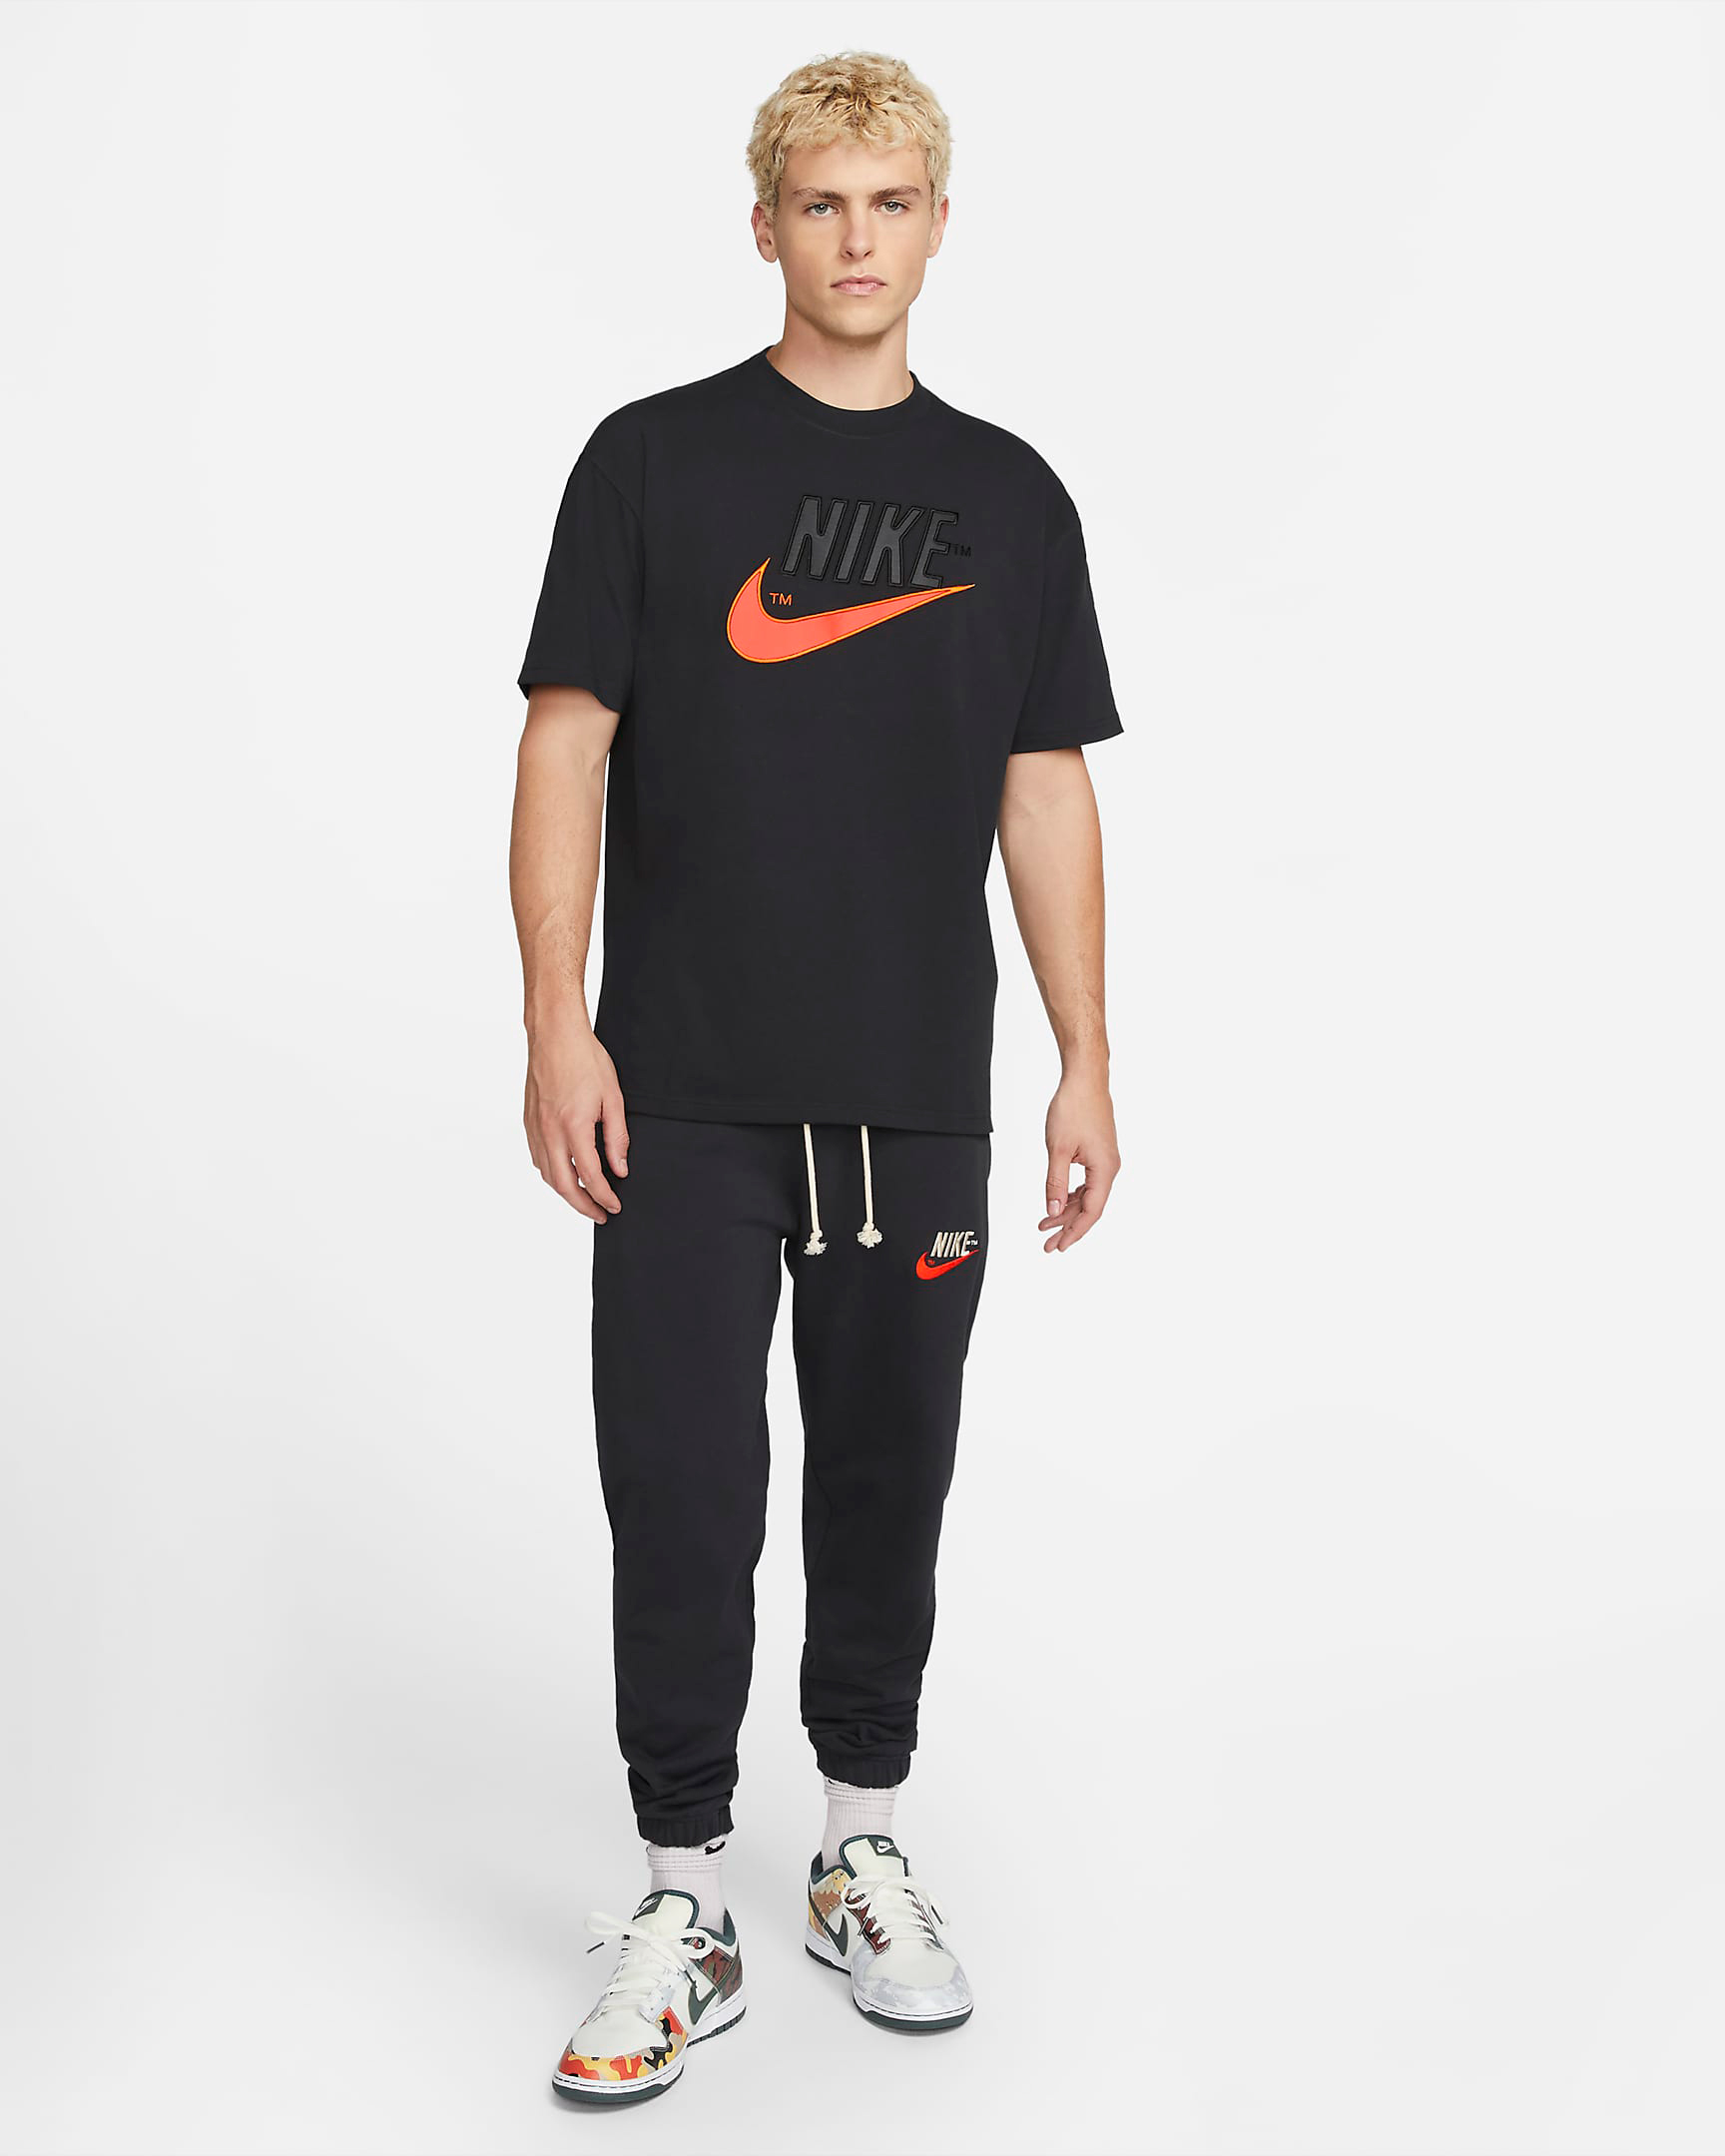 nike-sportswear-off-noir-orange-t-shirt-jogger-pants